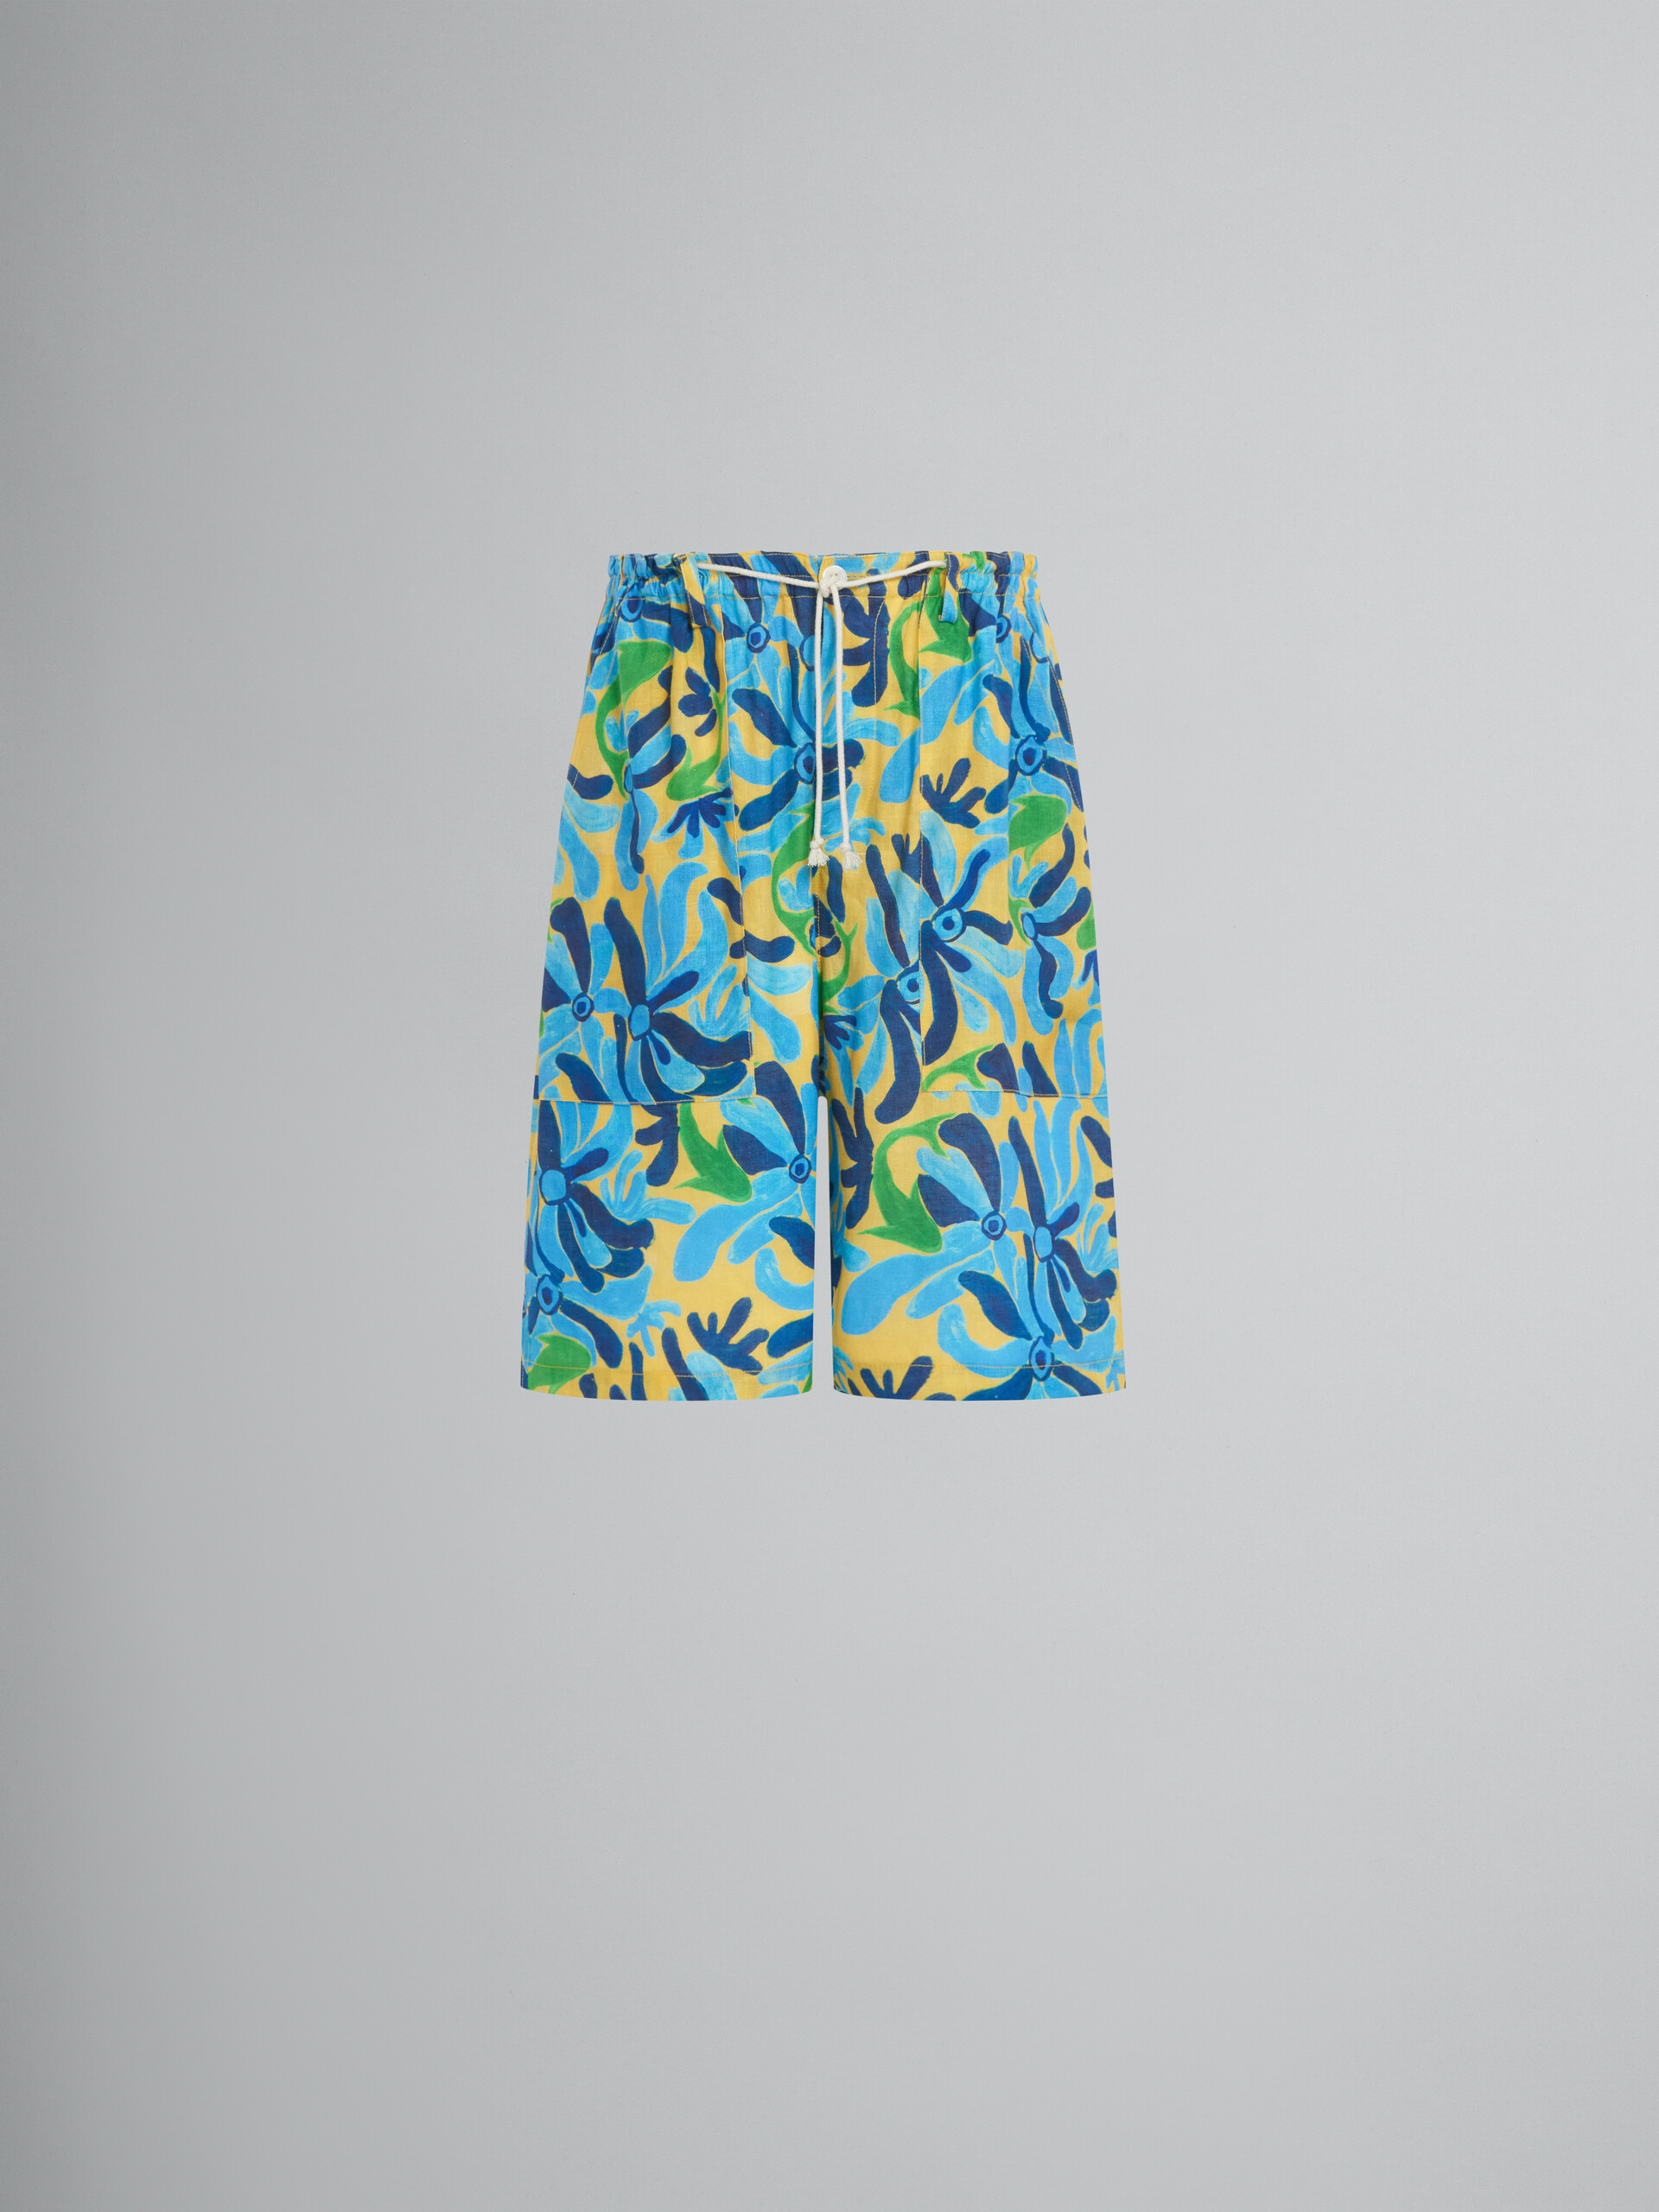 Marni x No Vacancy Inn - Gauze shorts with Chippy Fishes print - Pants - Image 1